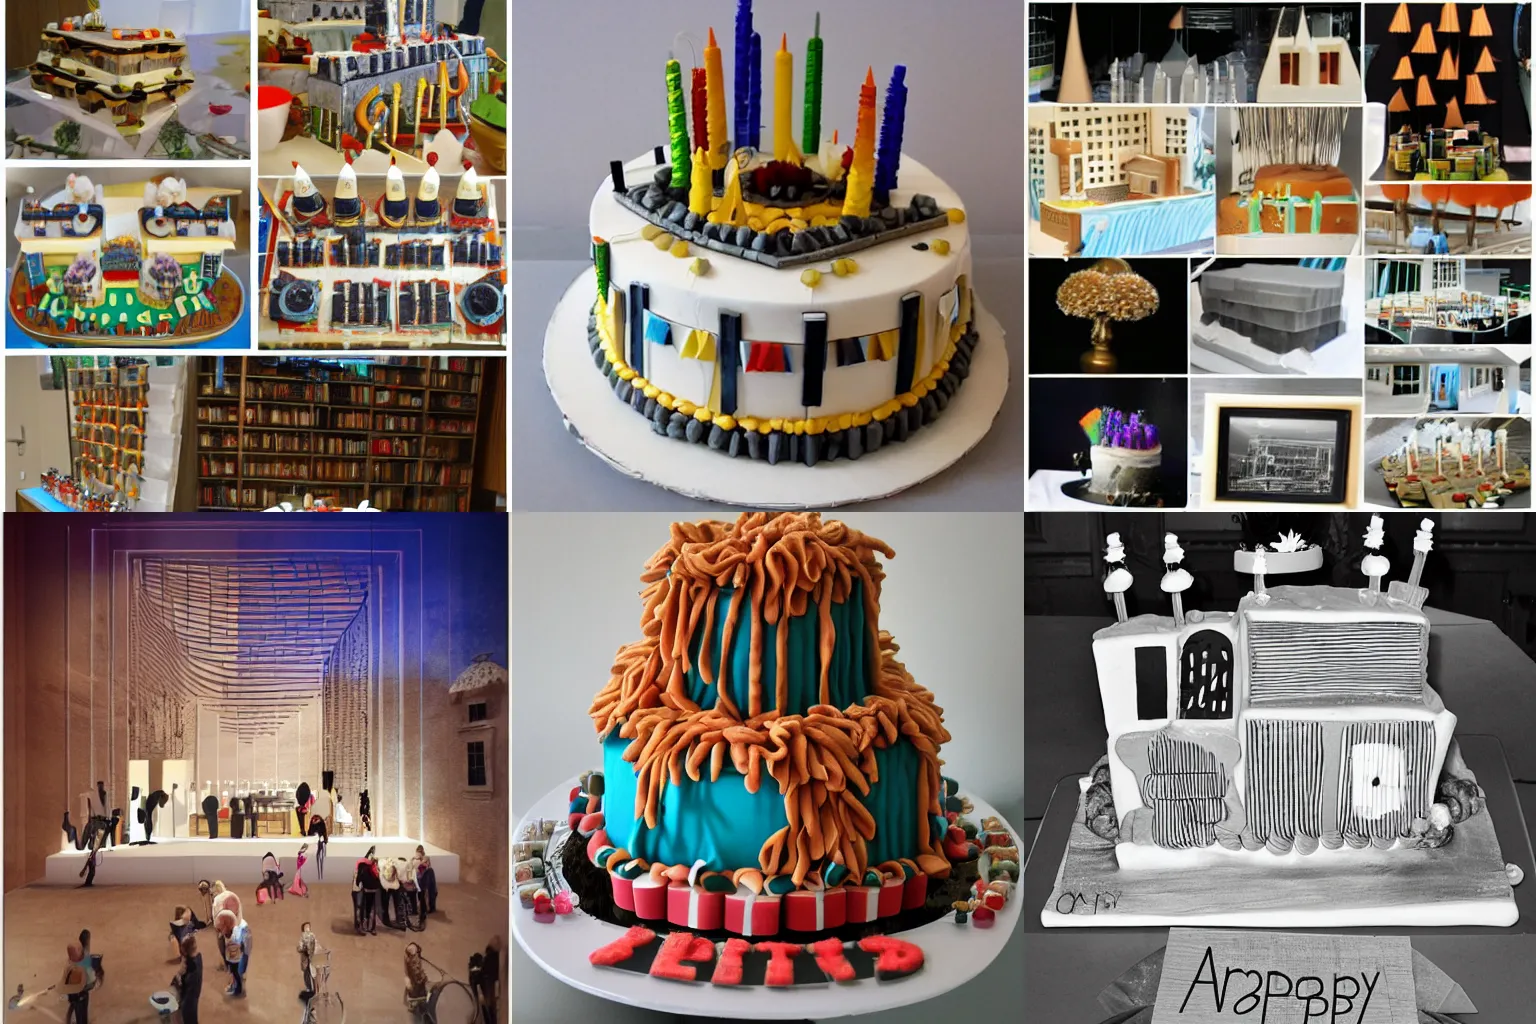 Prompt: Architect's Birthday